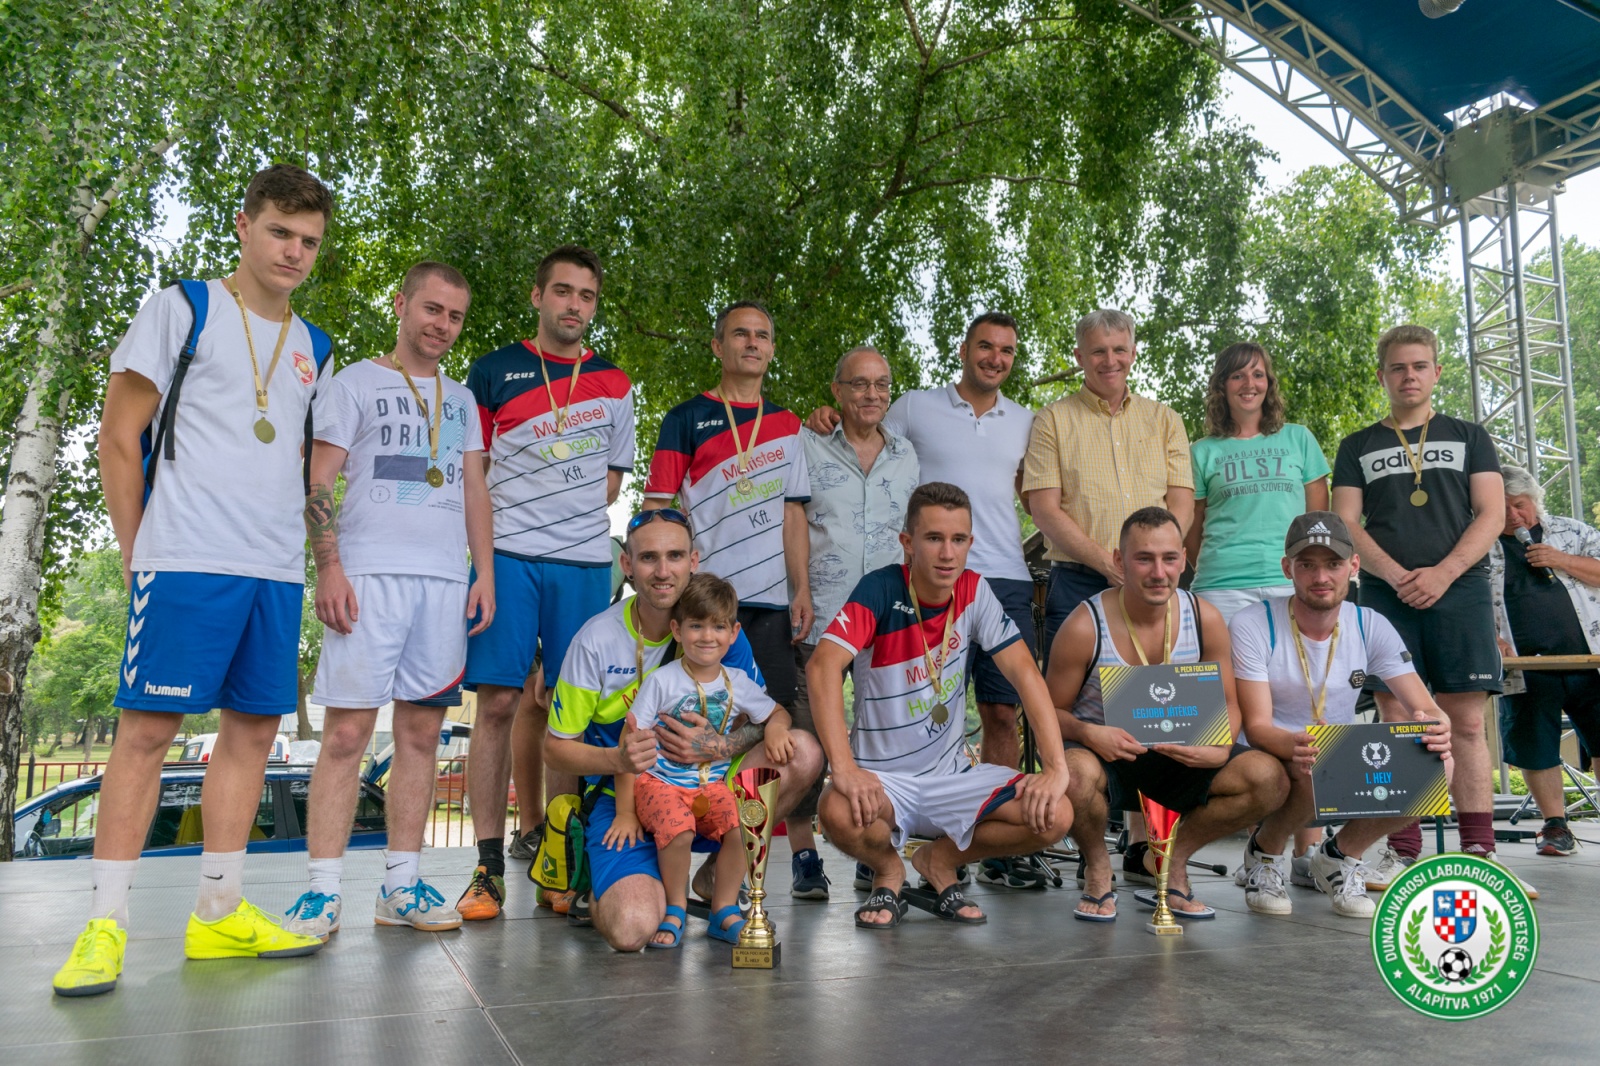 Peca Foci Kupa győztes csapat Multisteel 2019